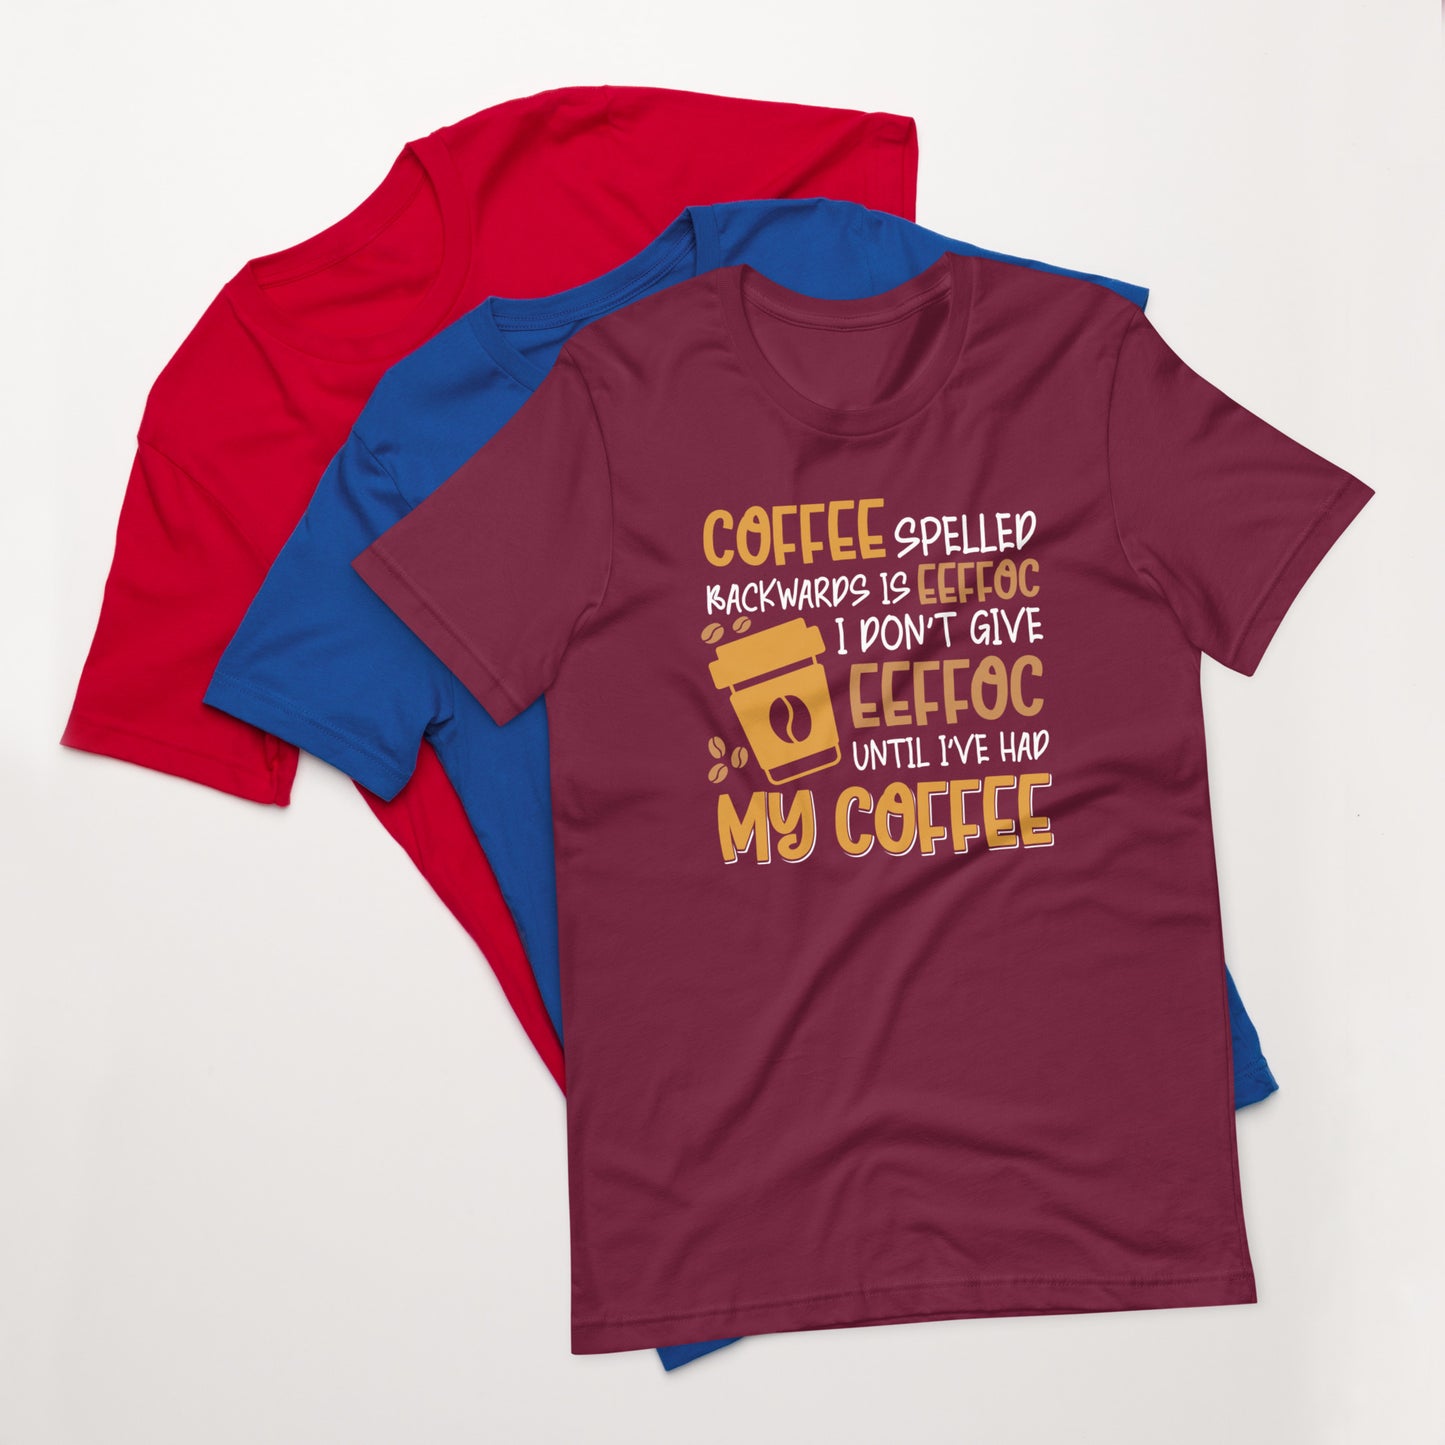 Coffee Spelled Backwards is Eeffoc I Don't Give Eeffoc Until I've Had My Coffee Unisex T-shirt